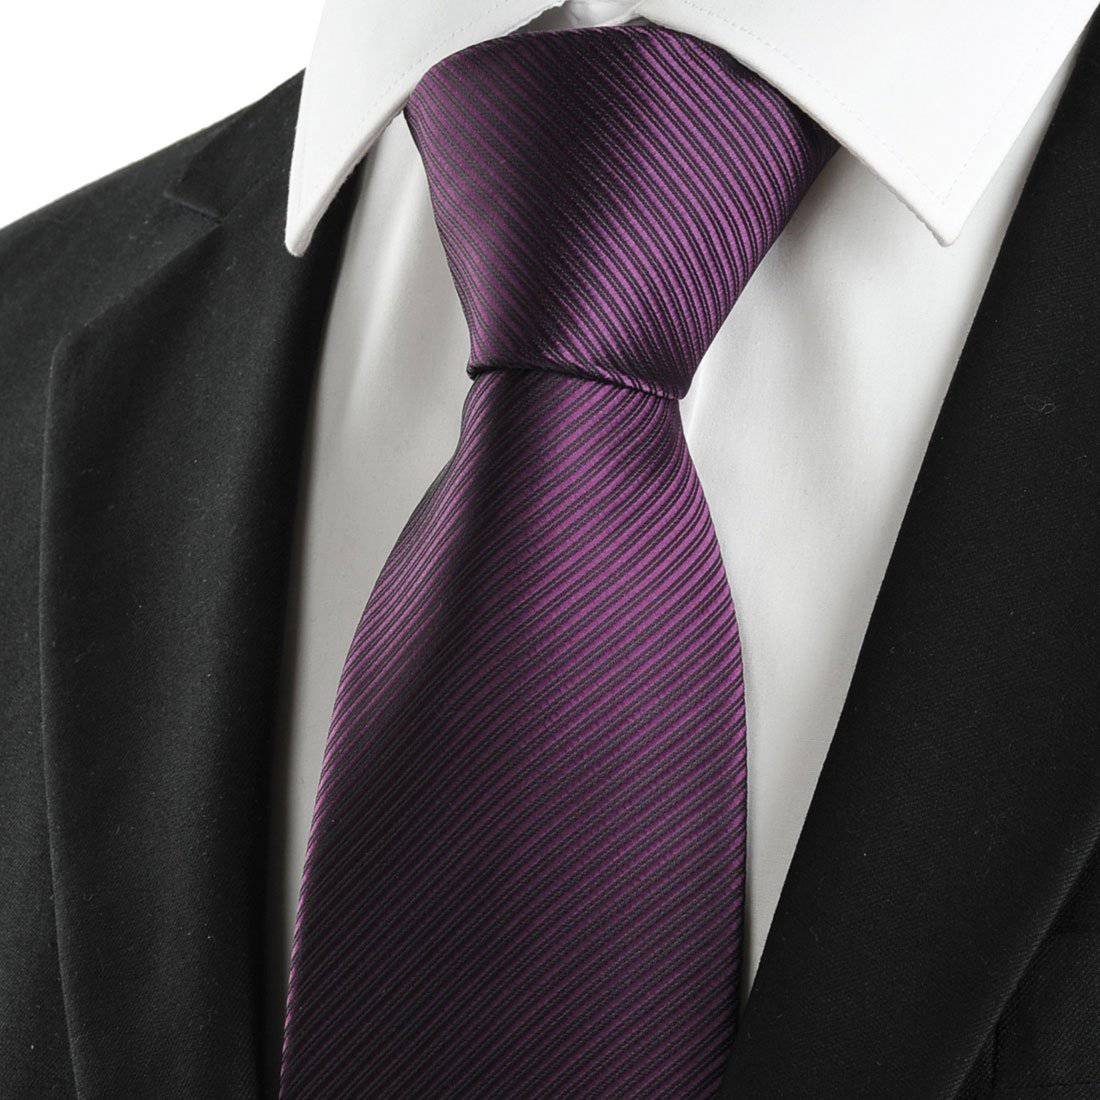 Blackberry Striped Tie - Tie, bowtie, pocket square  | Kissties